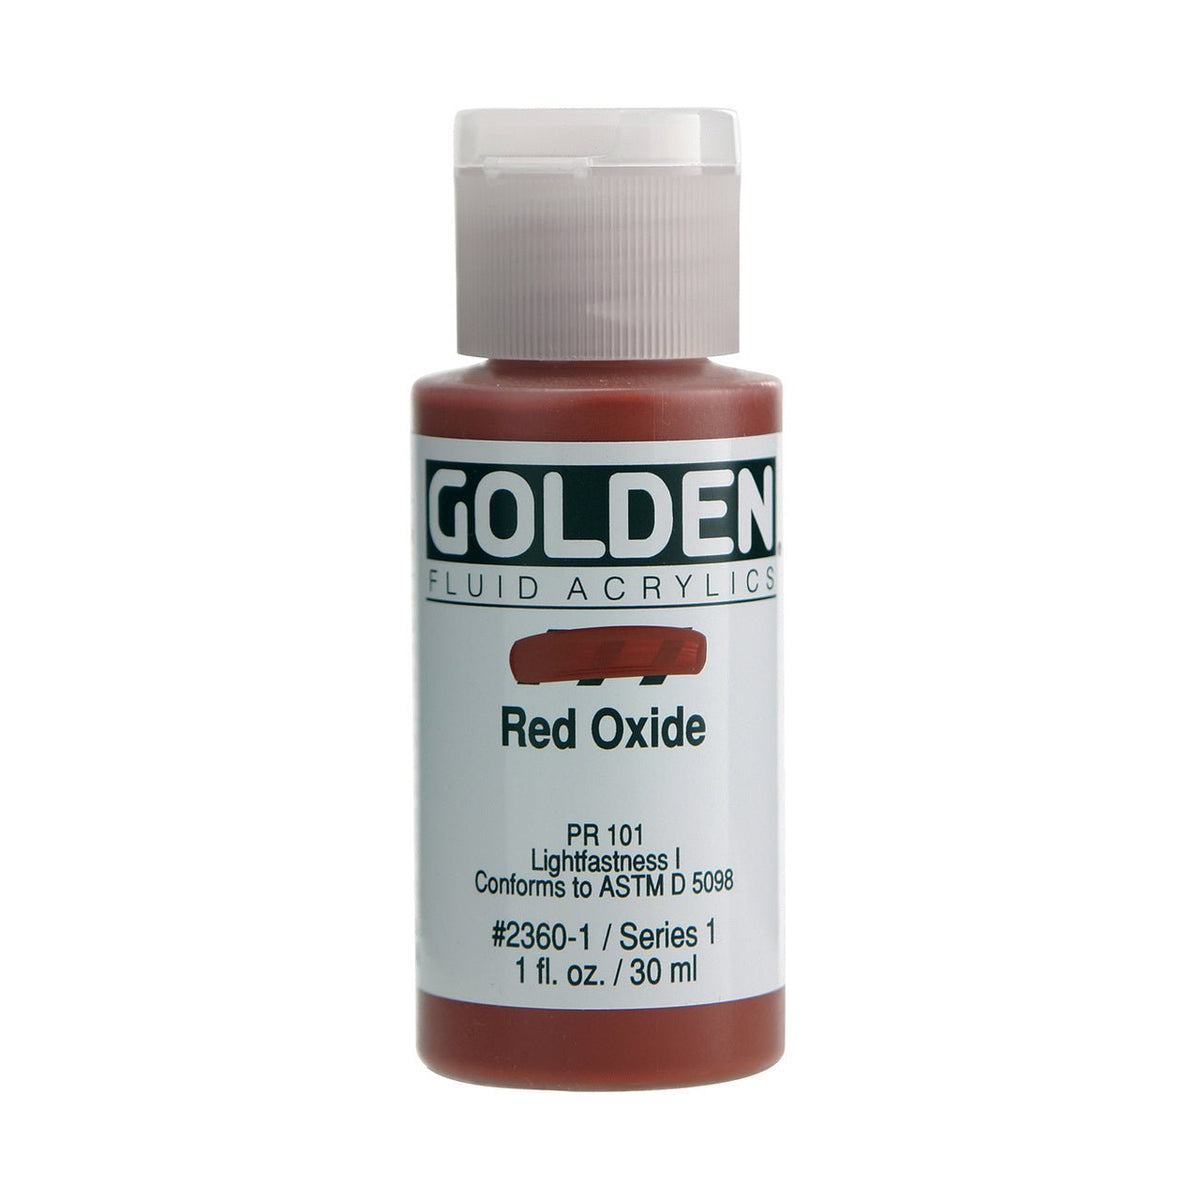 Golden Fluid Acrylic Red Oxide 1 oz - merriartist.com